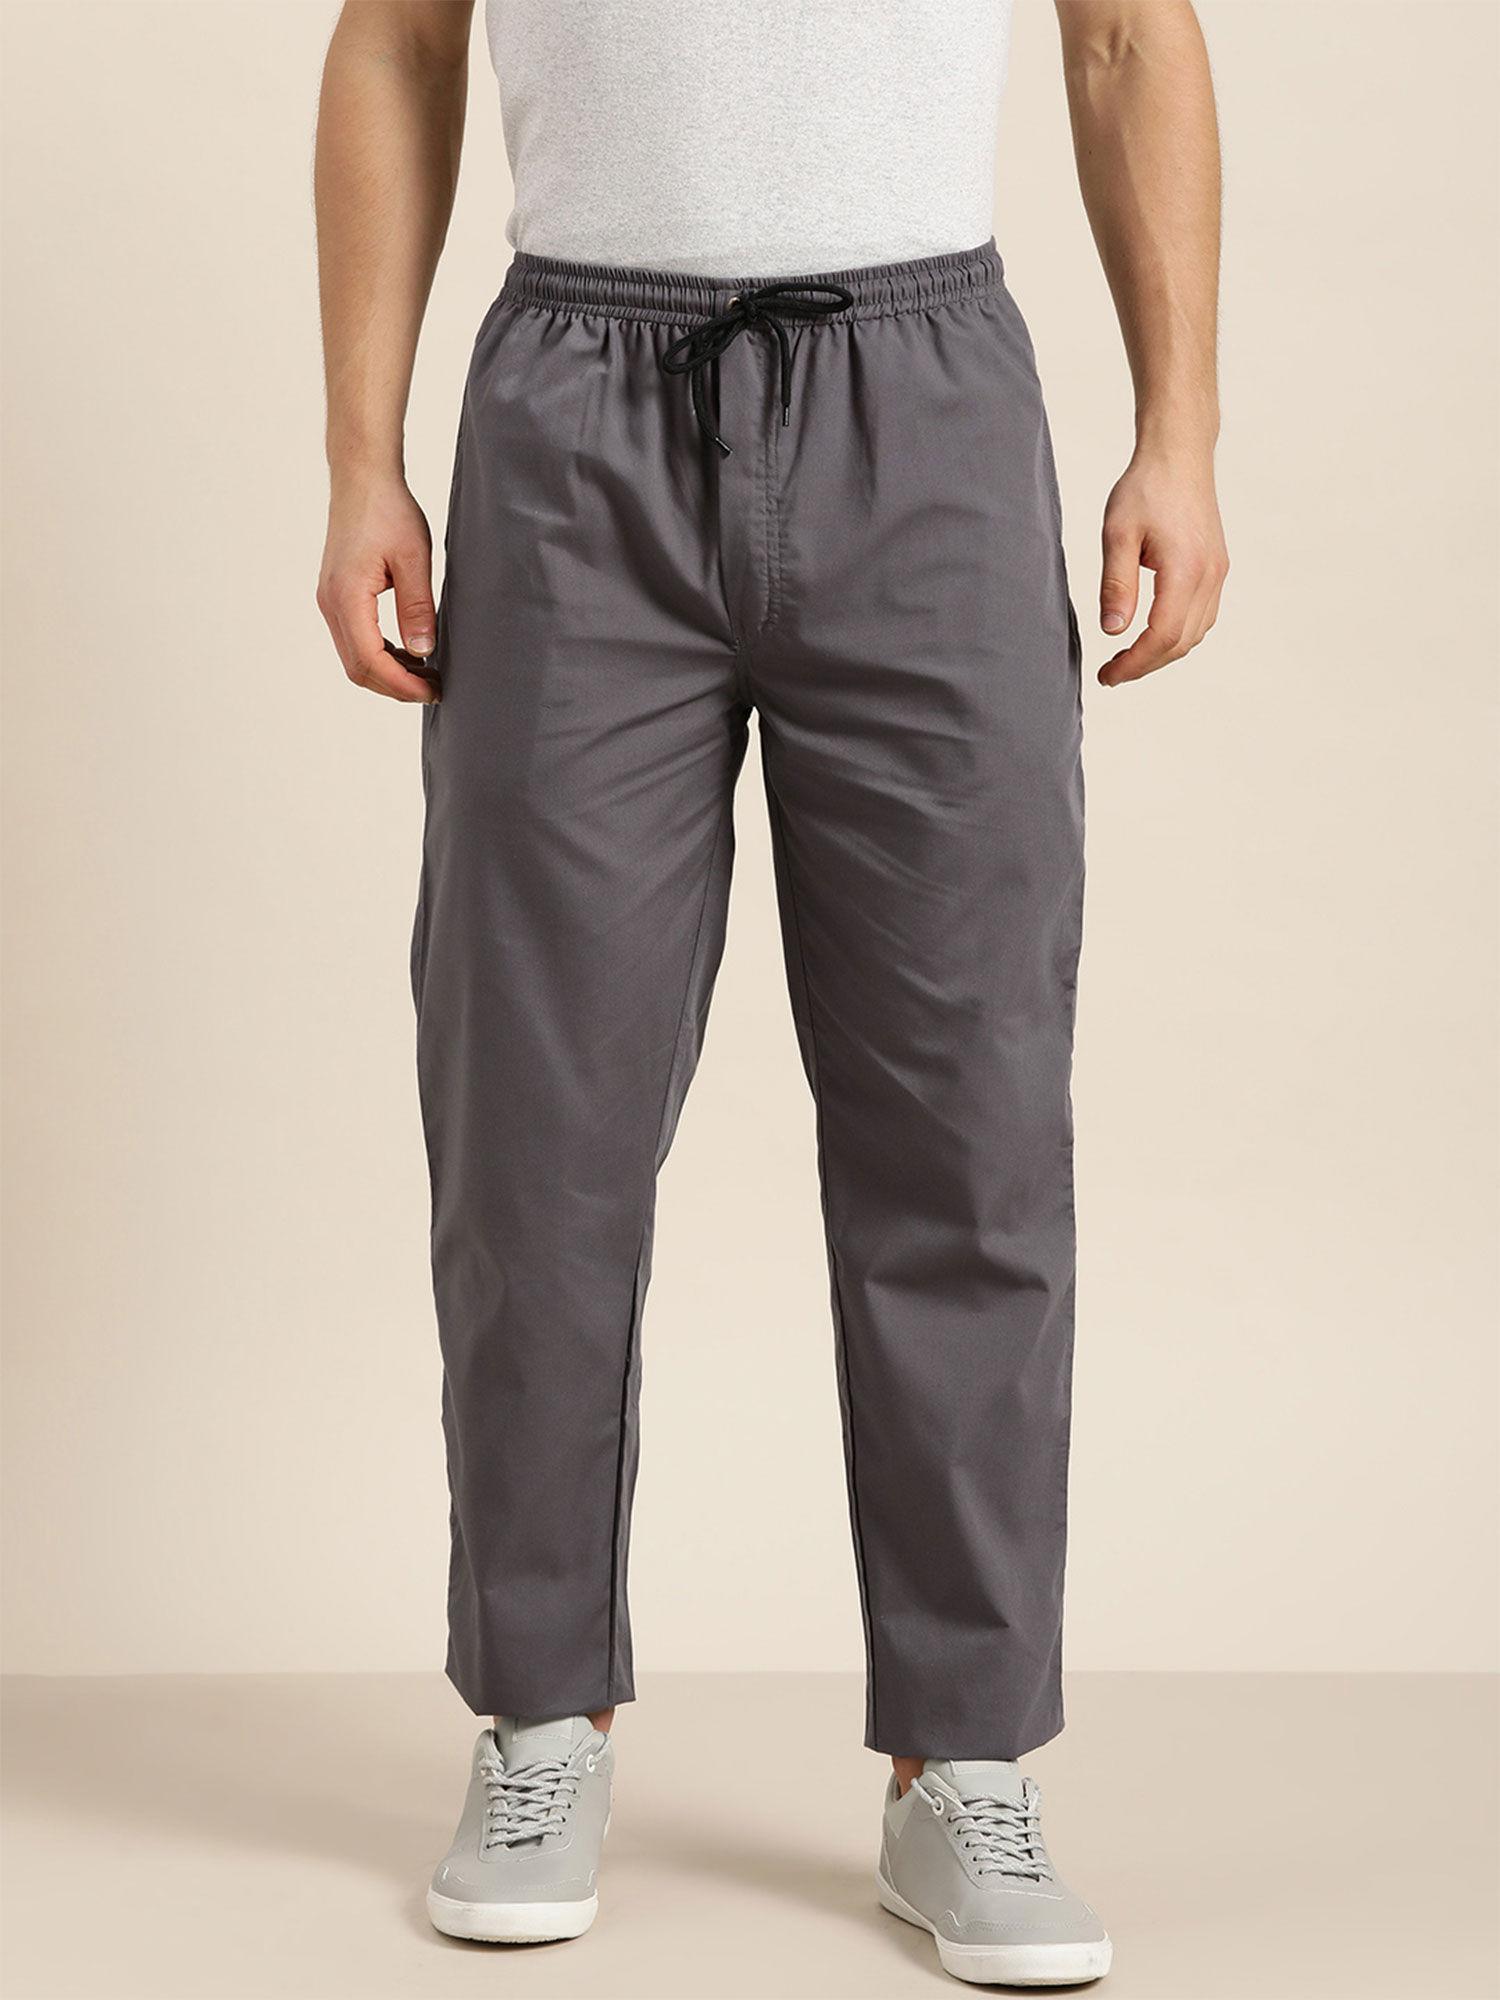 cotton dark grey solid track pant